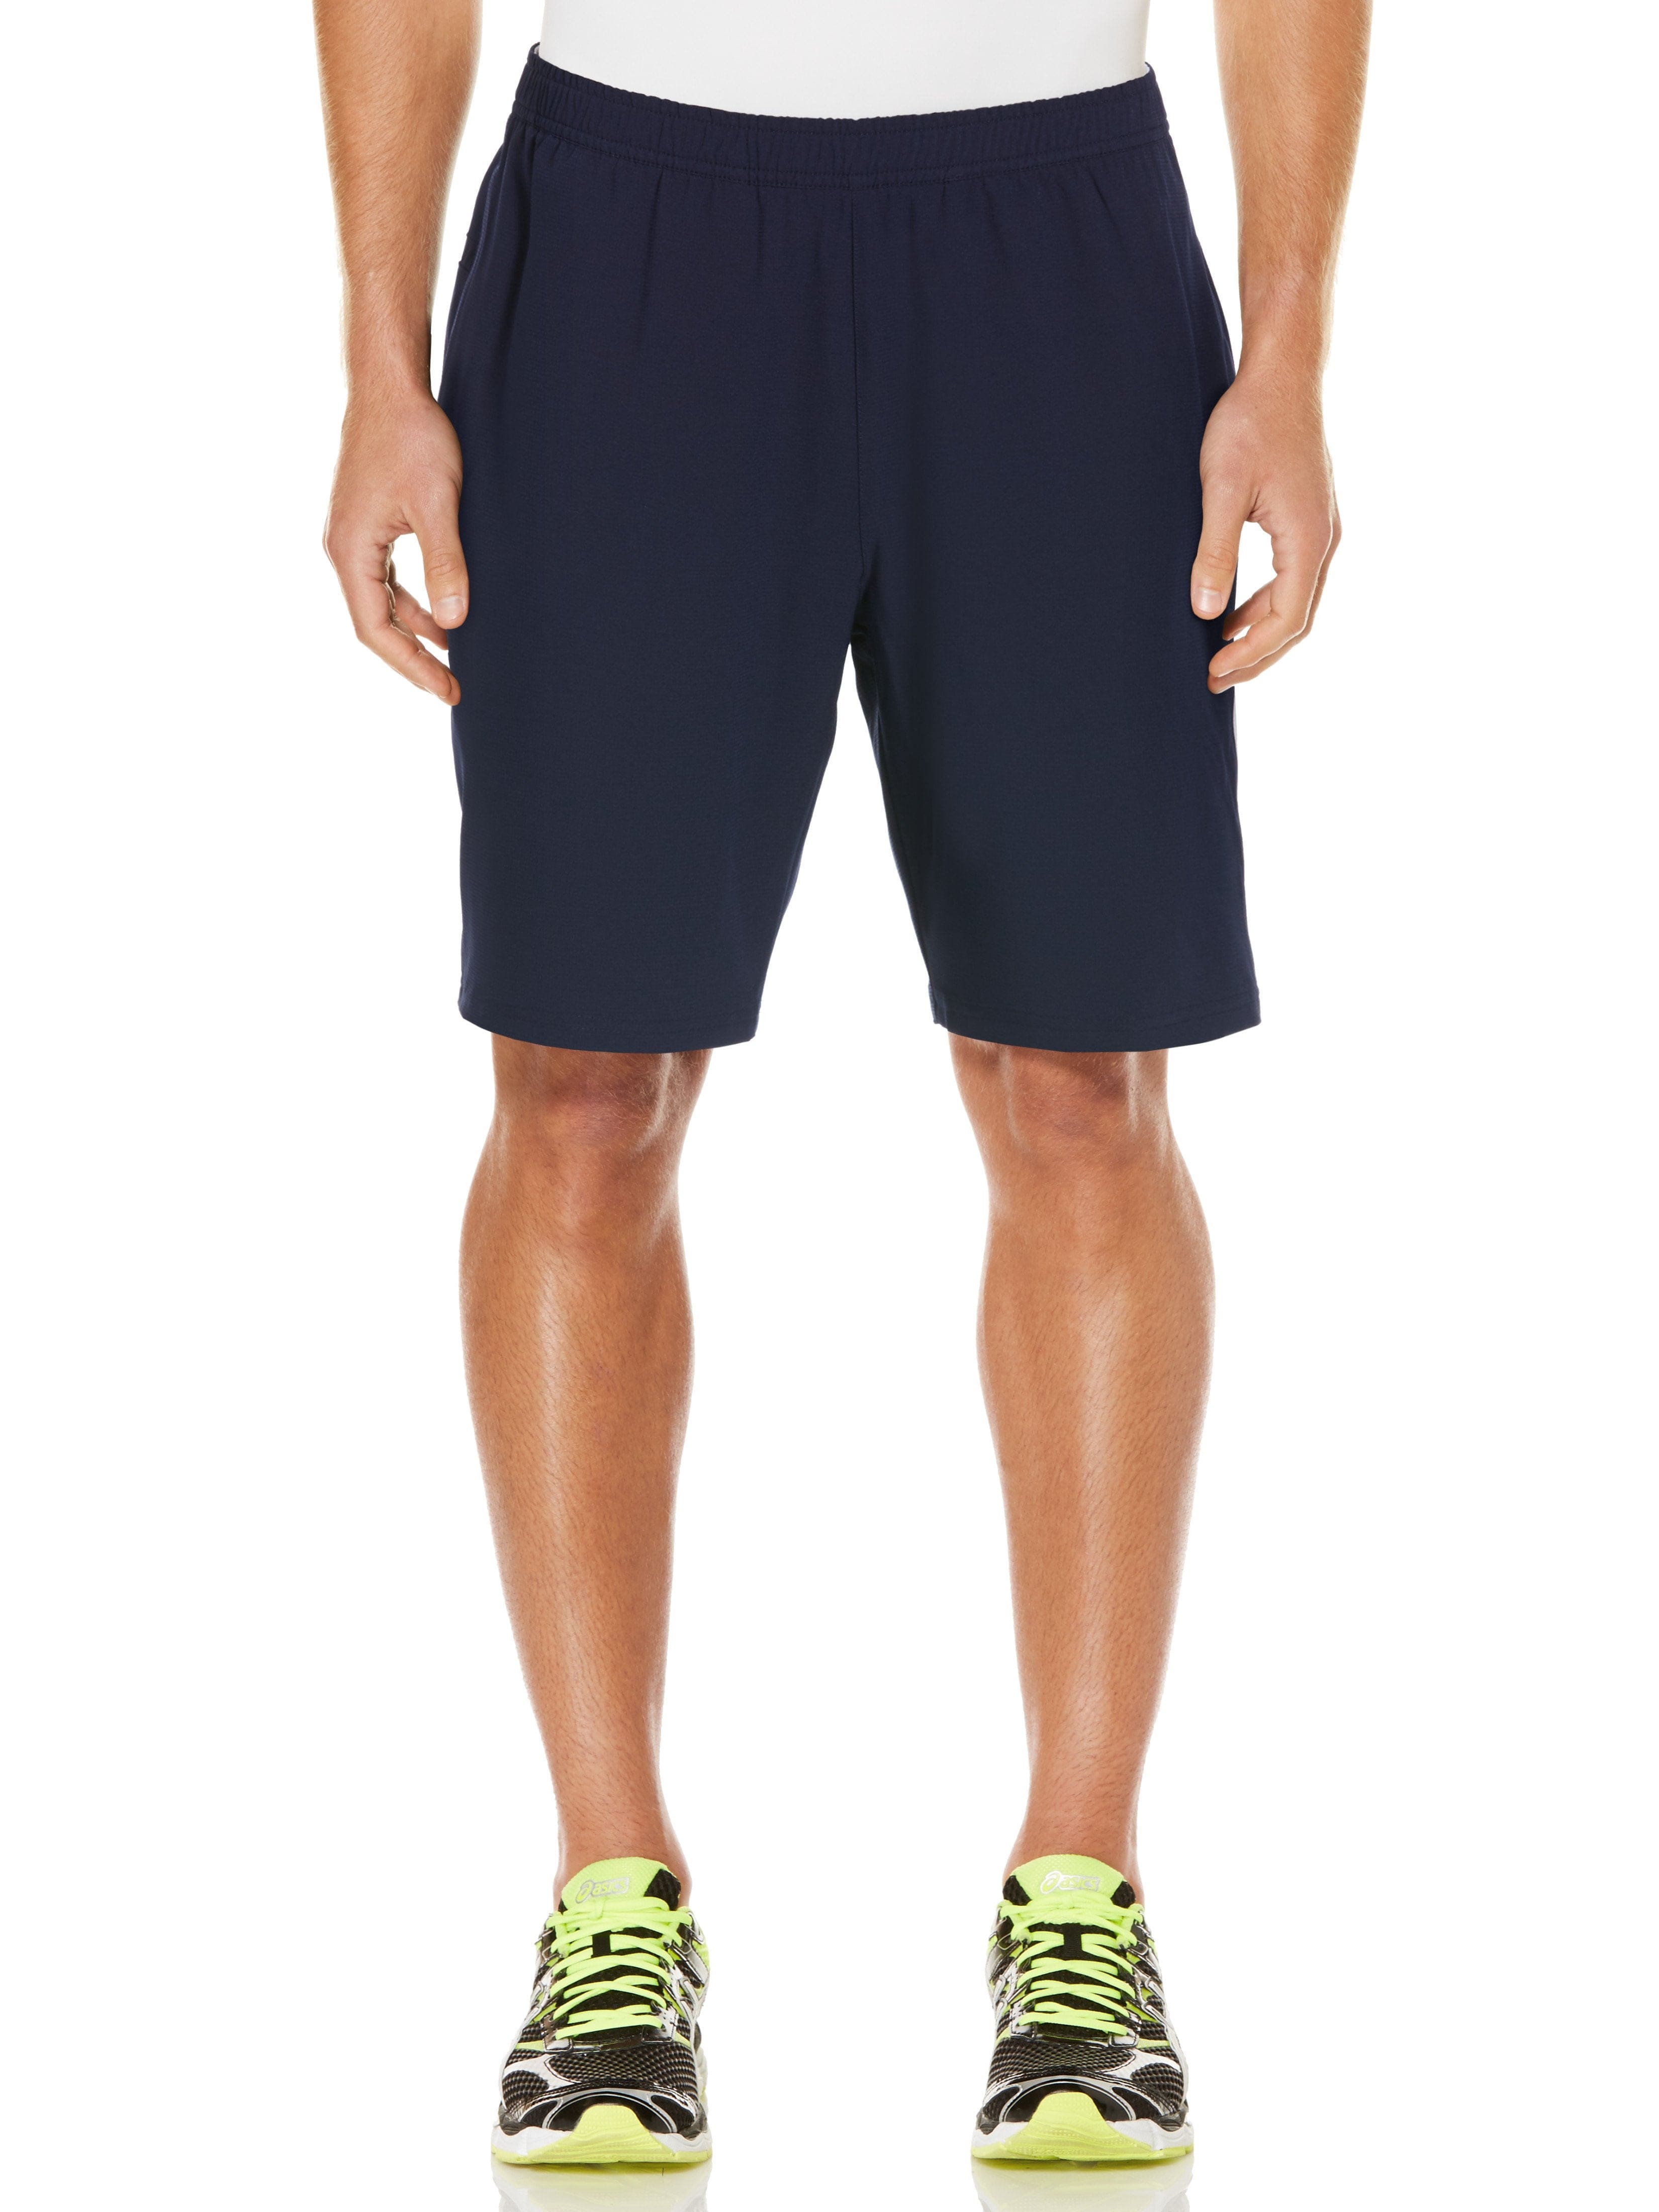 Grand Slam Mens Athletic Shorts, Size 2XL, Navy Blue, Polyester/Elastane | Golf Apparel Shop